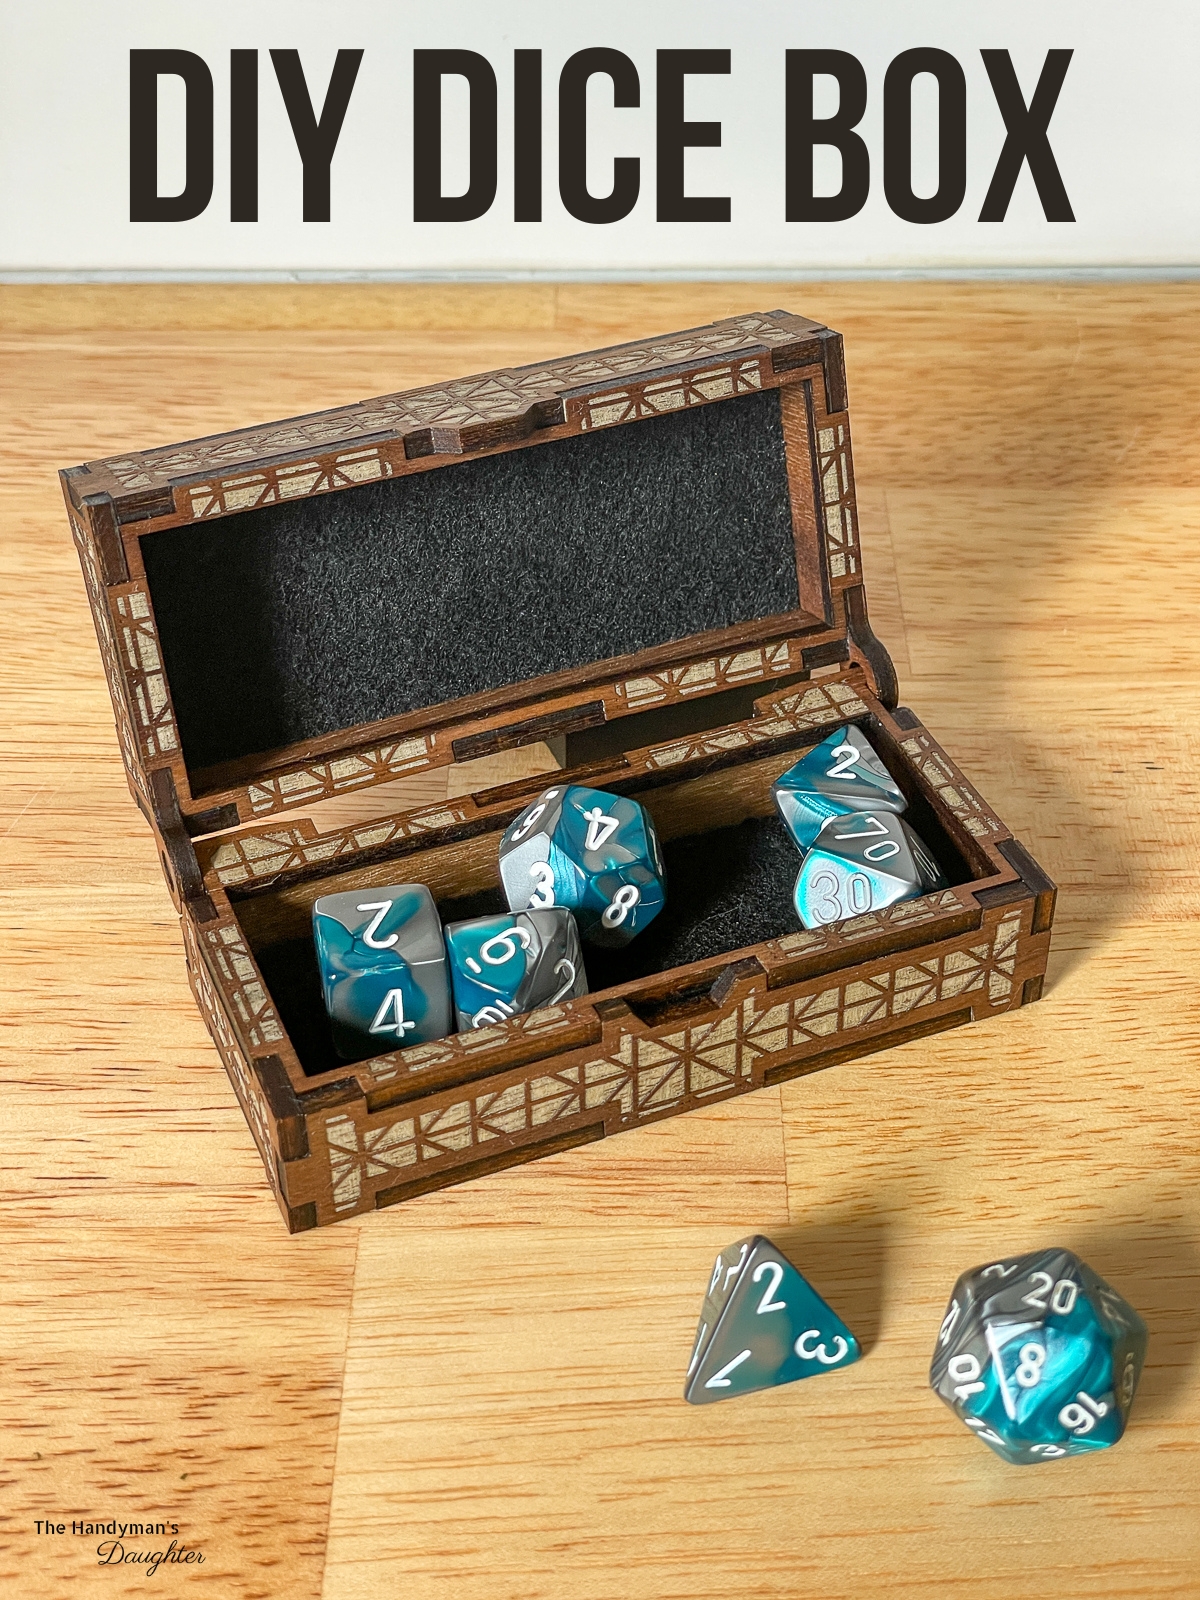 DIY dice box with text overlay